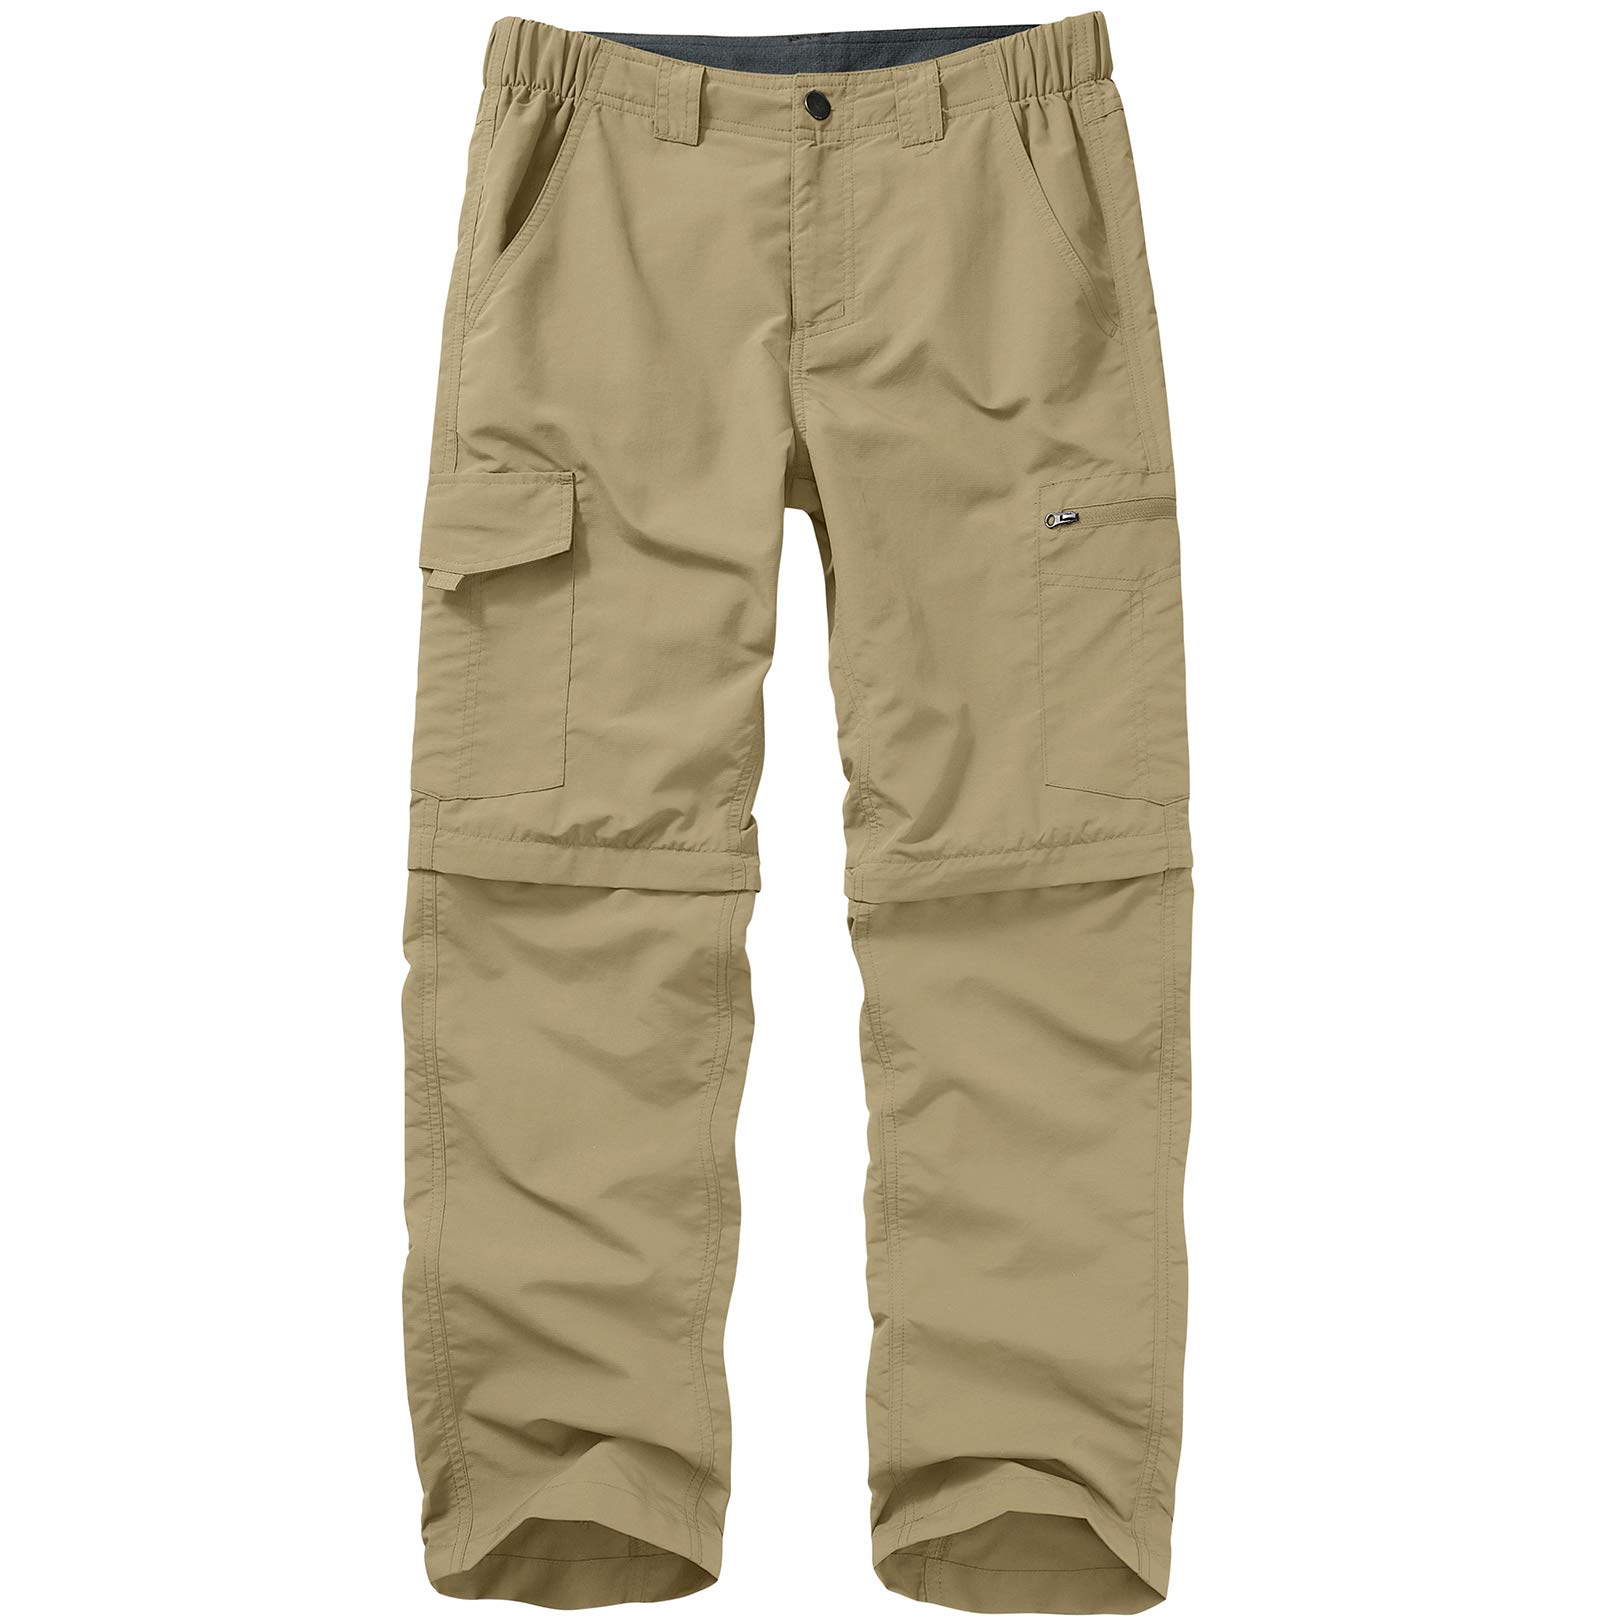 Buy Mens Hiking Pants Convertible Quick Dry Lightweight Zip Off